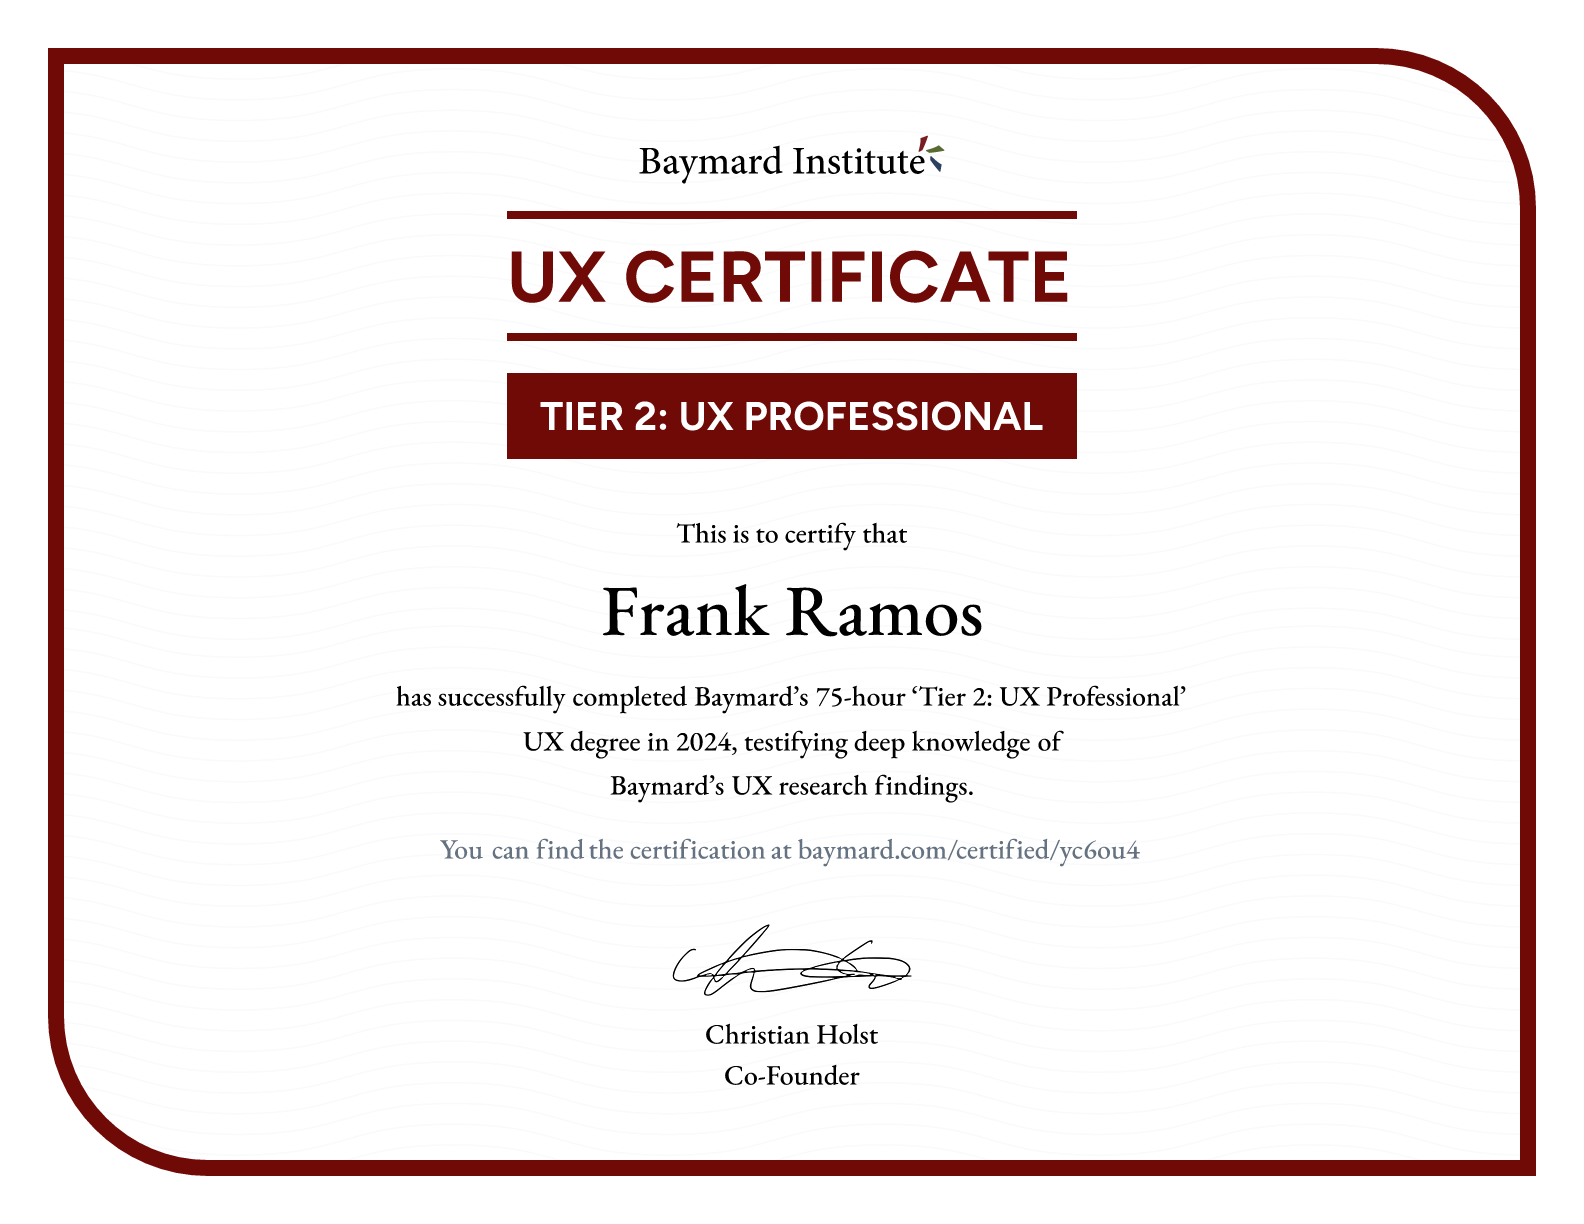 Frank Ramos’s certificate